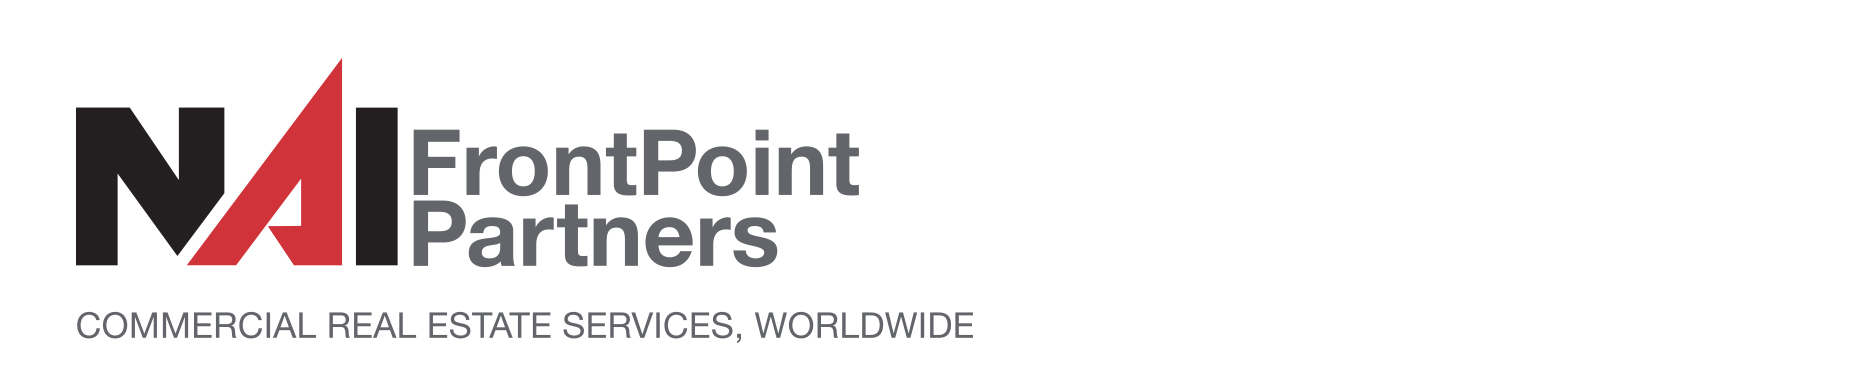 Logo of NAI FrontPoint Partners